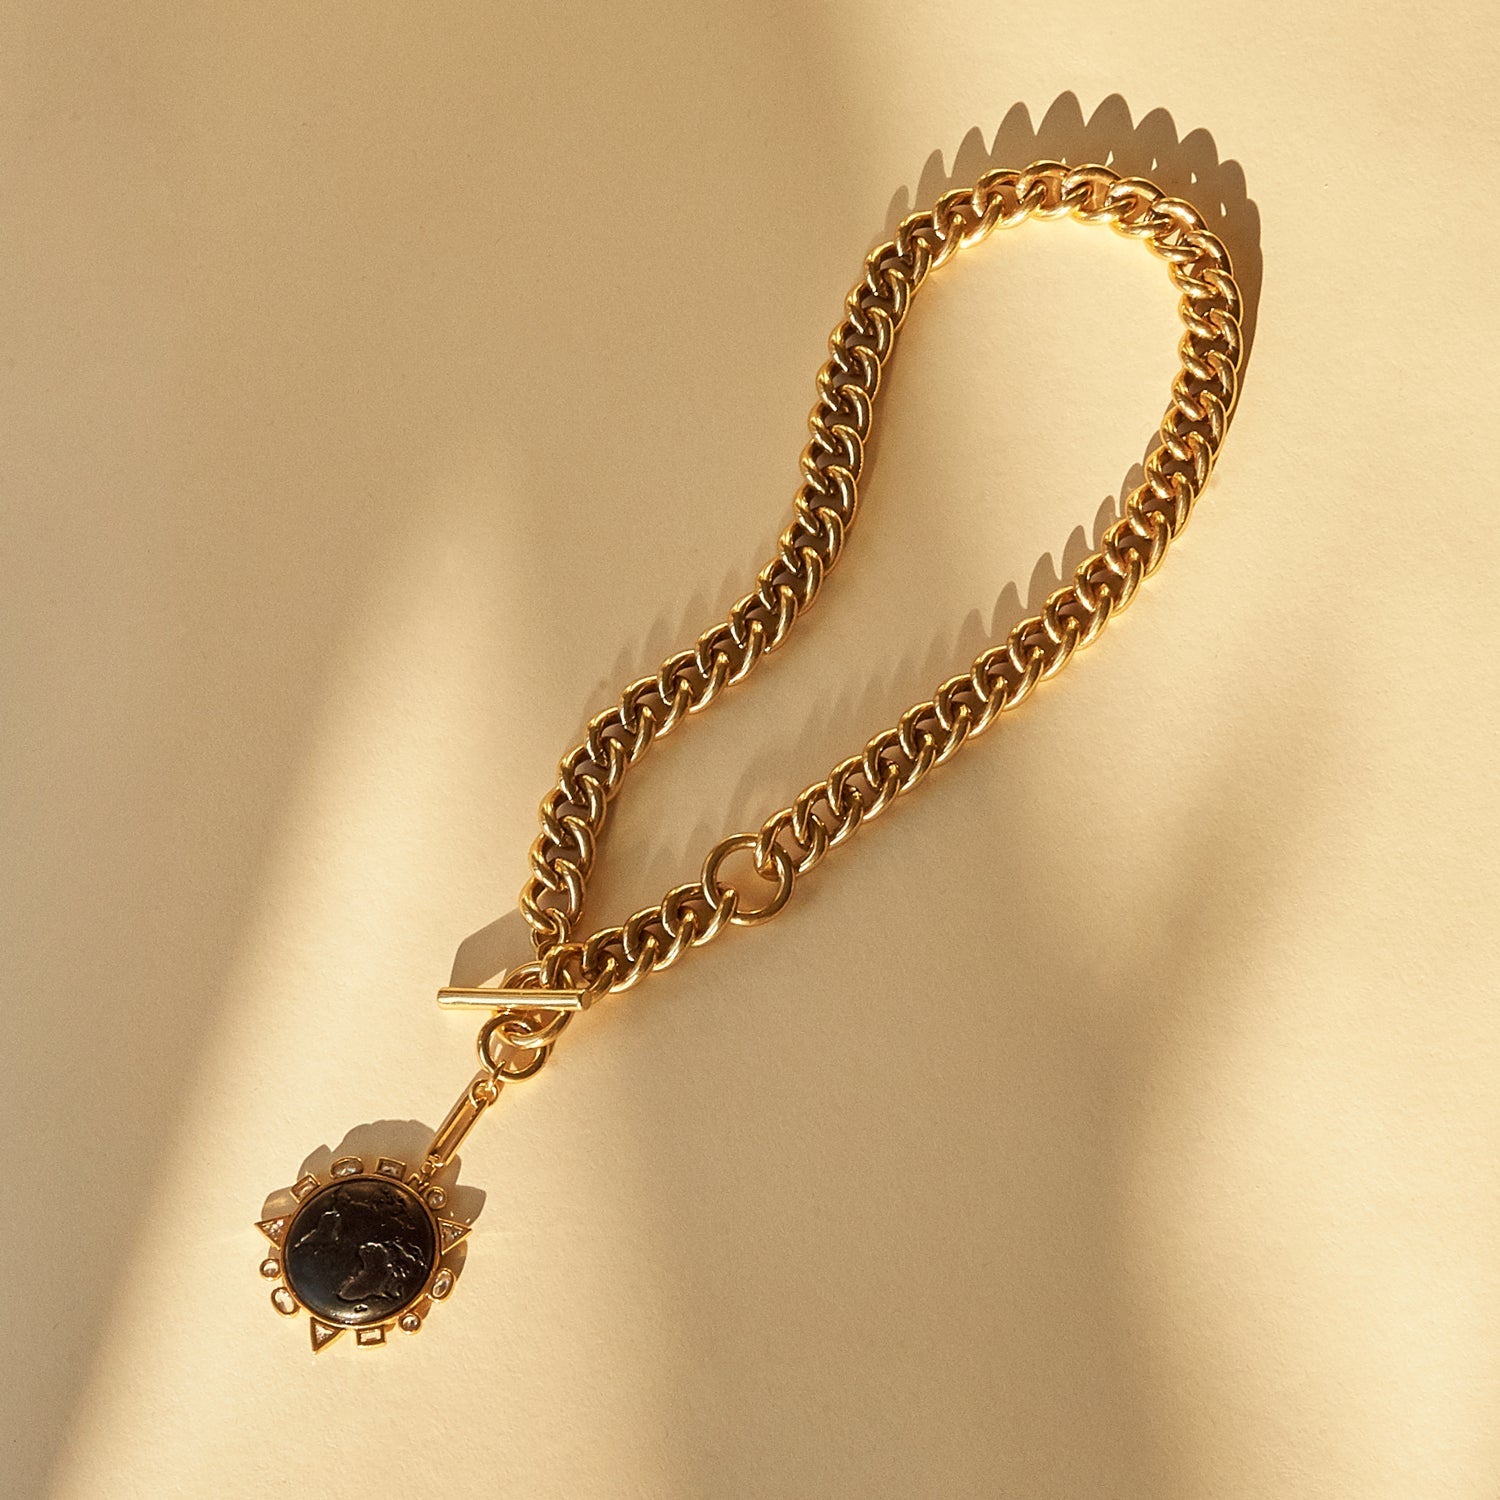 Odyssey Necklace Black Gold by Mignonne Gavigan